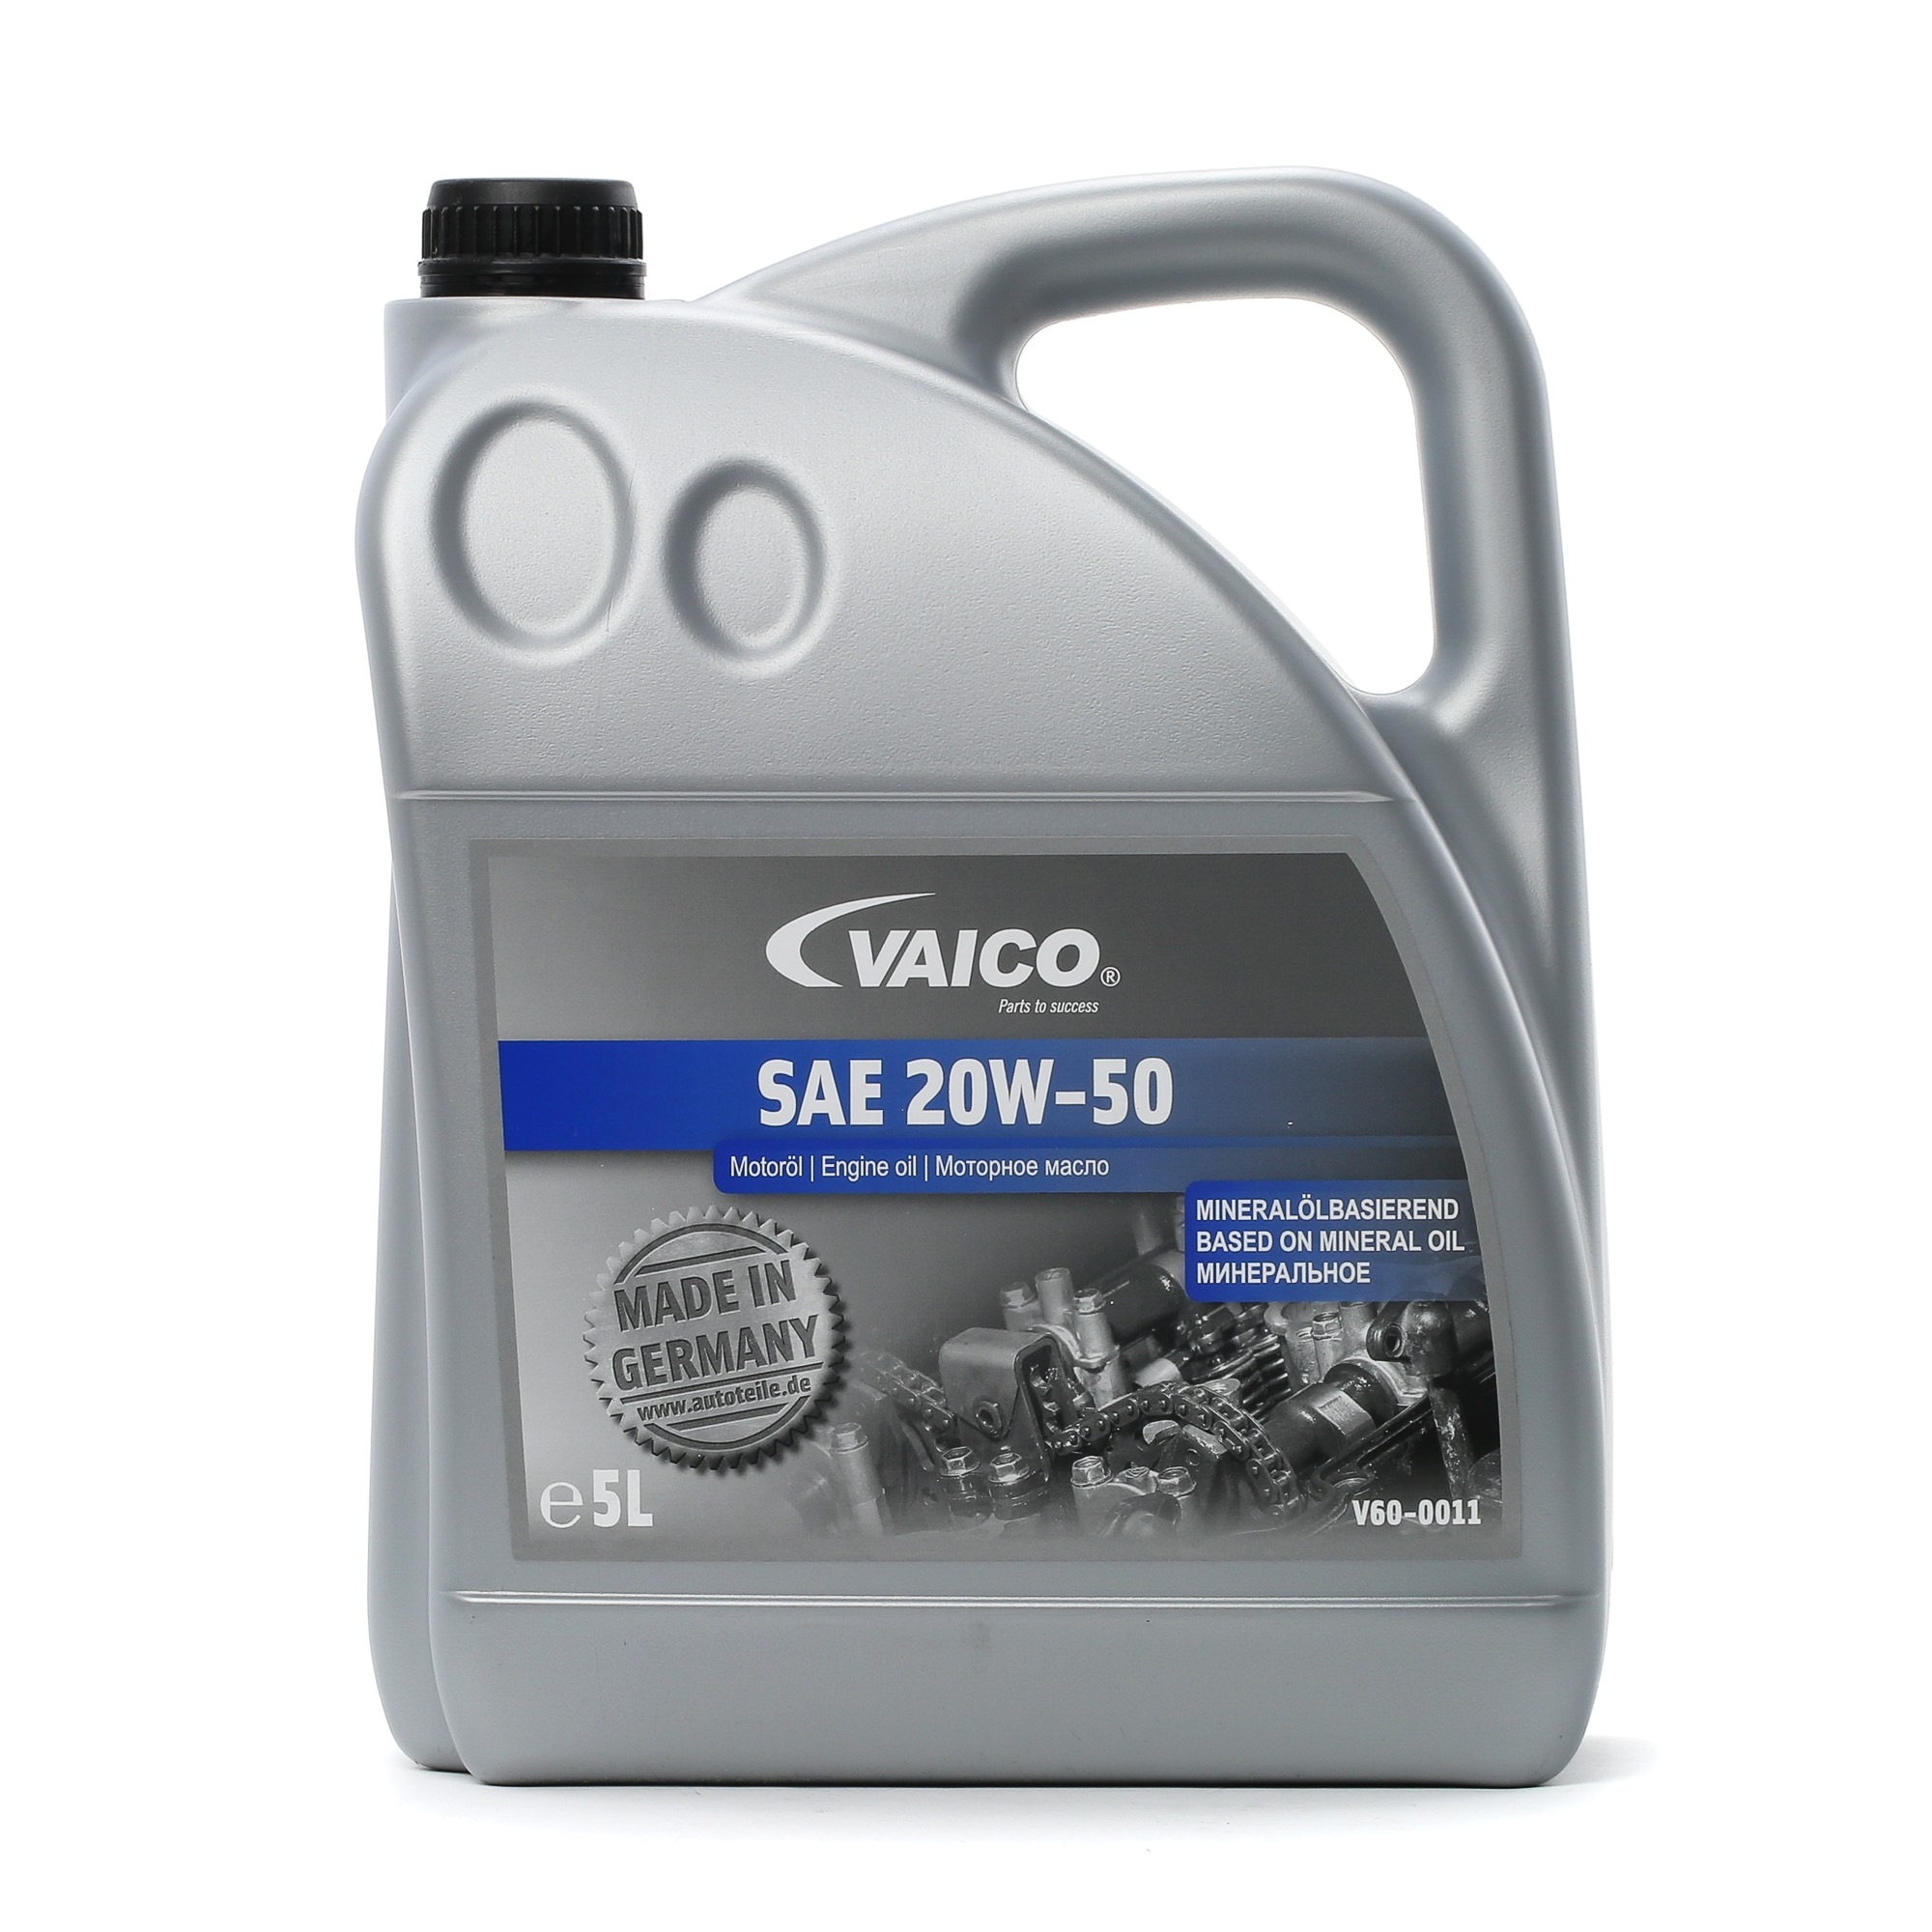 VAICO V60-0011 Olio motore economico nel negozio online